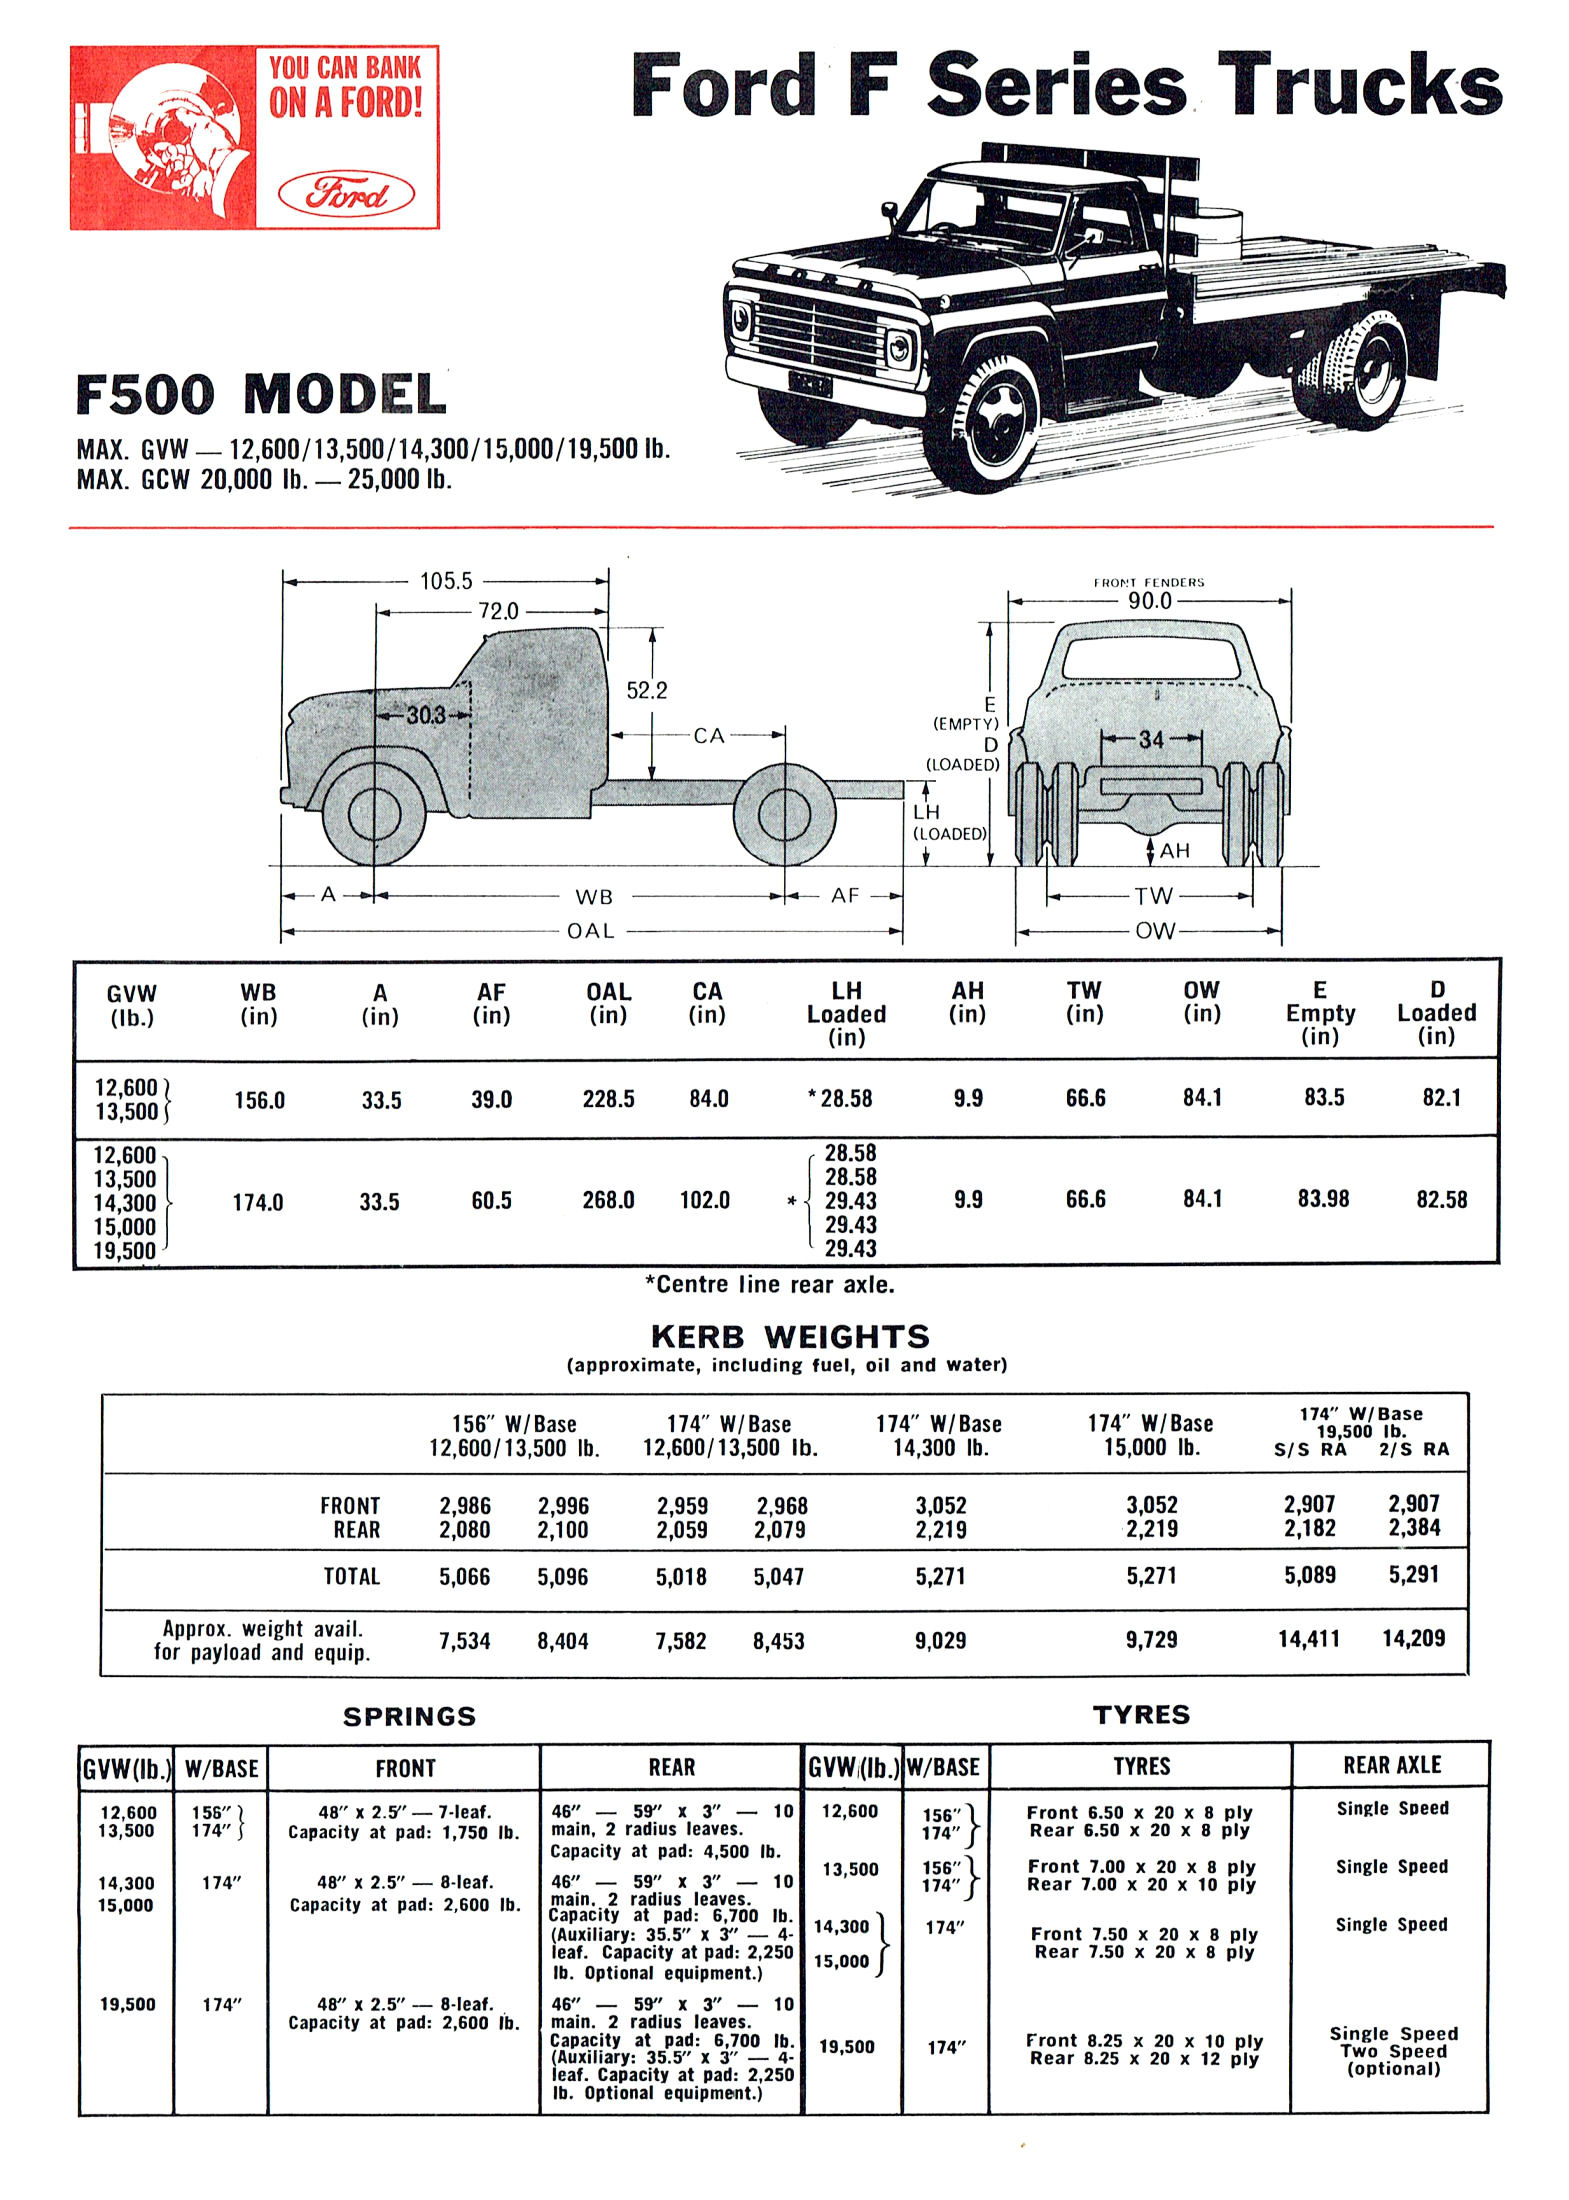 1968 Ford Trucks (Aus)-iF5Ra.jpg-2022-12-7 13.27.17